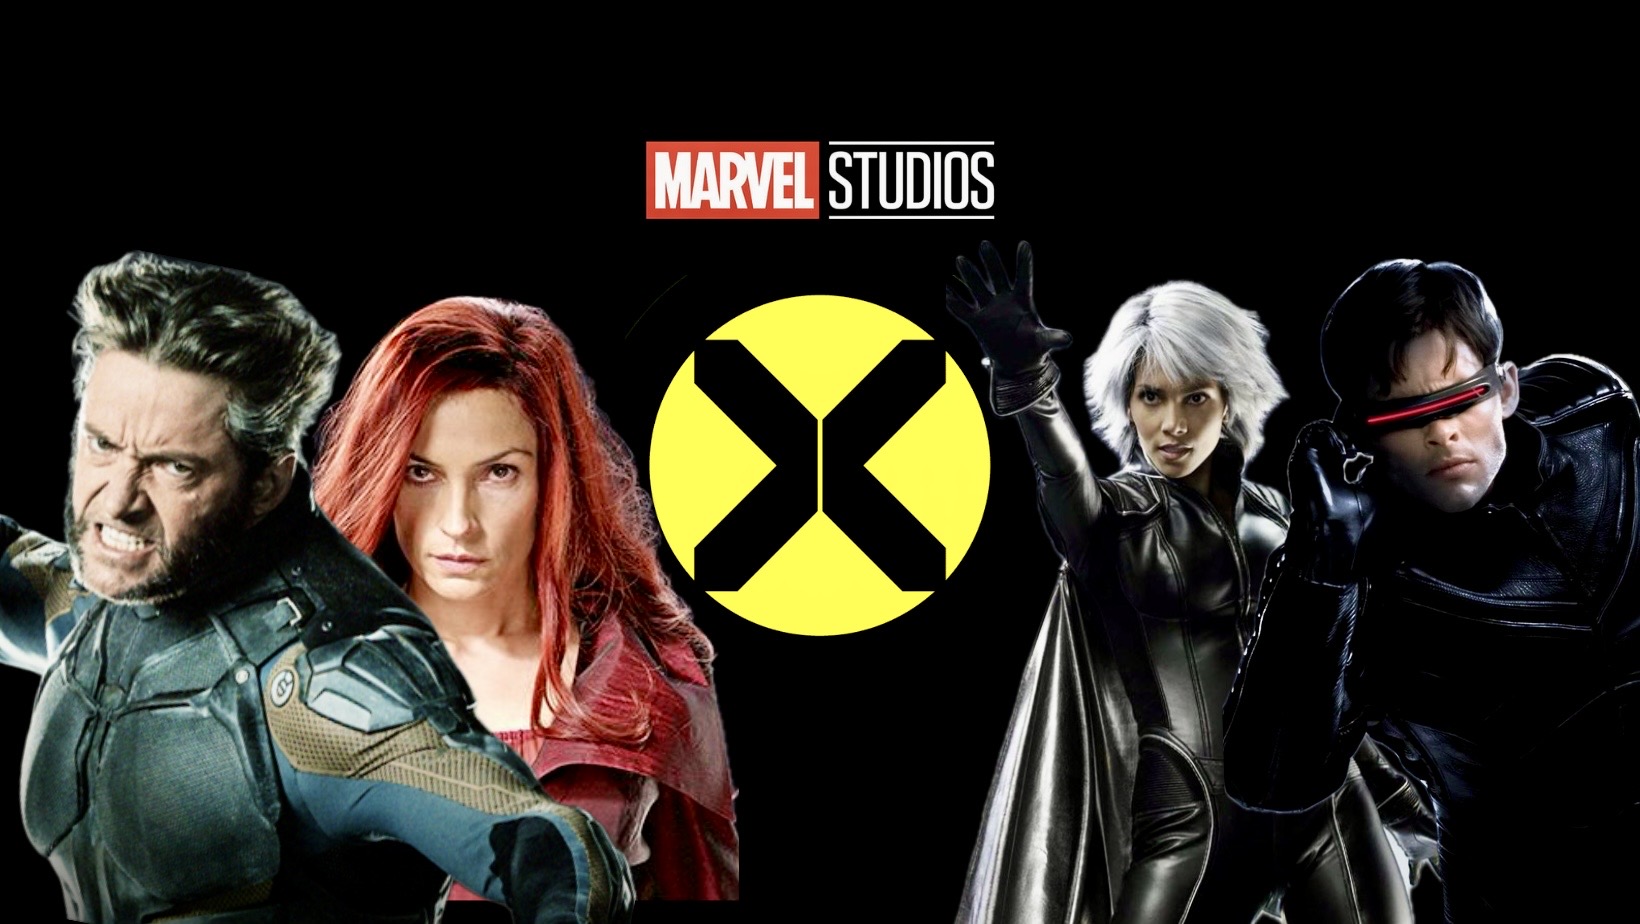 Mutanti in arrivo: X-Men, riprese anticipate per il reboot Marvel?